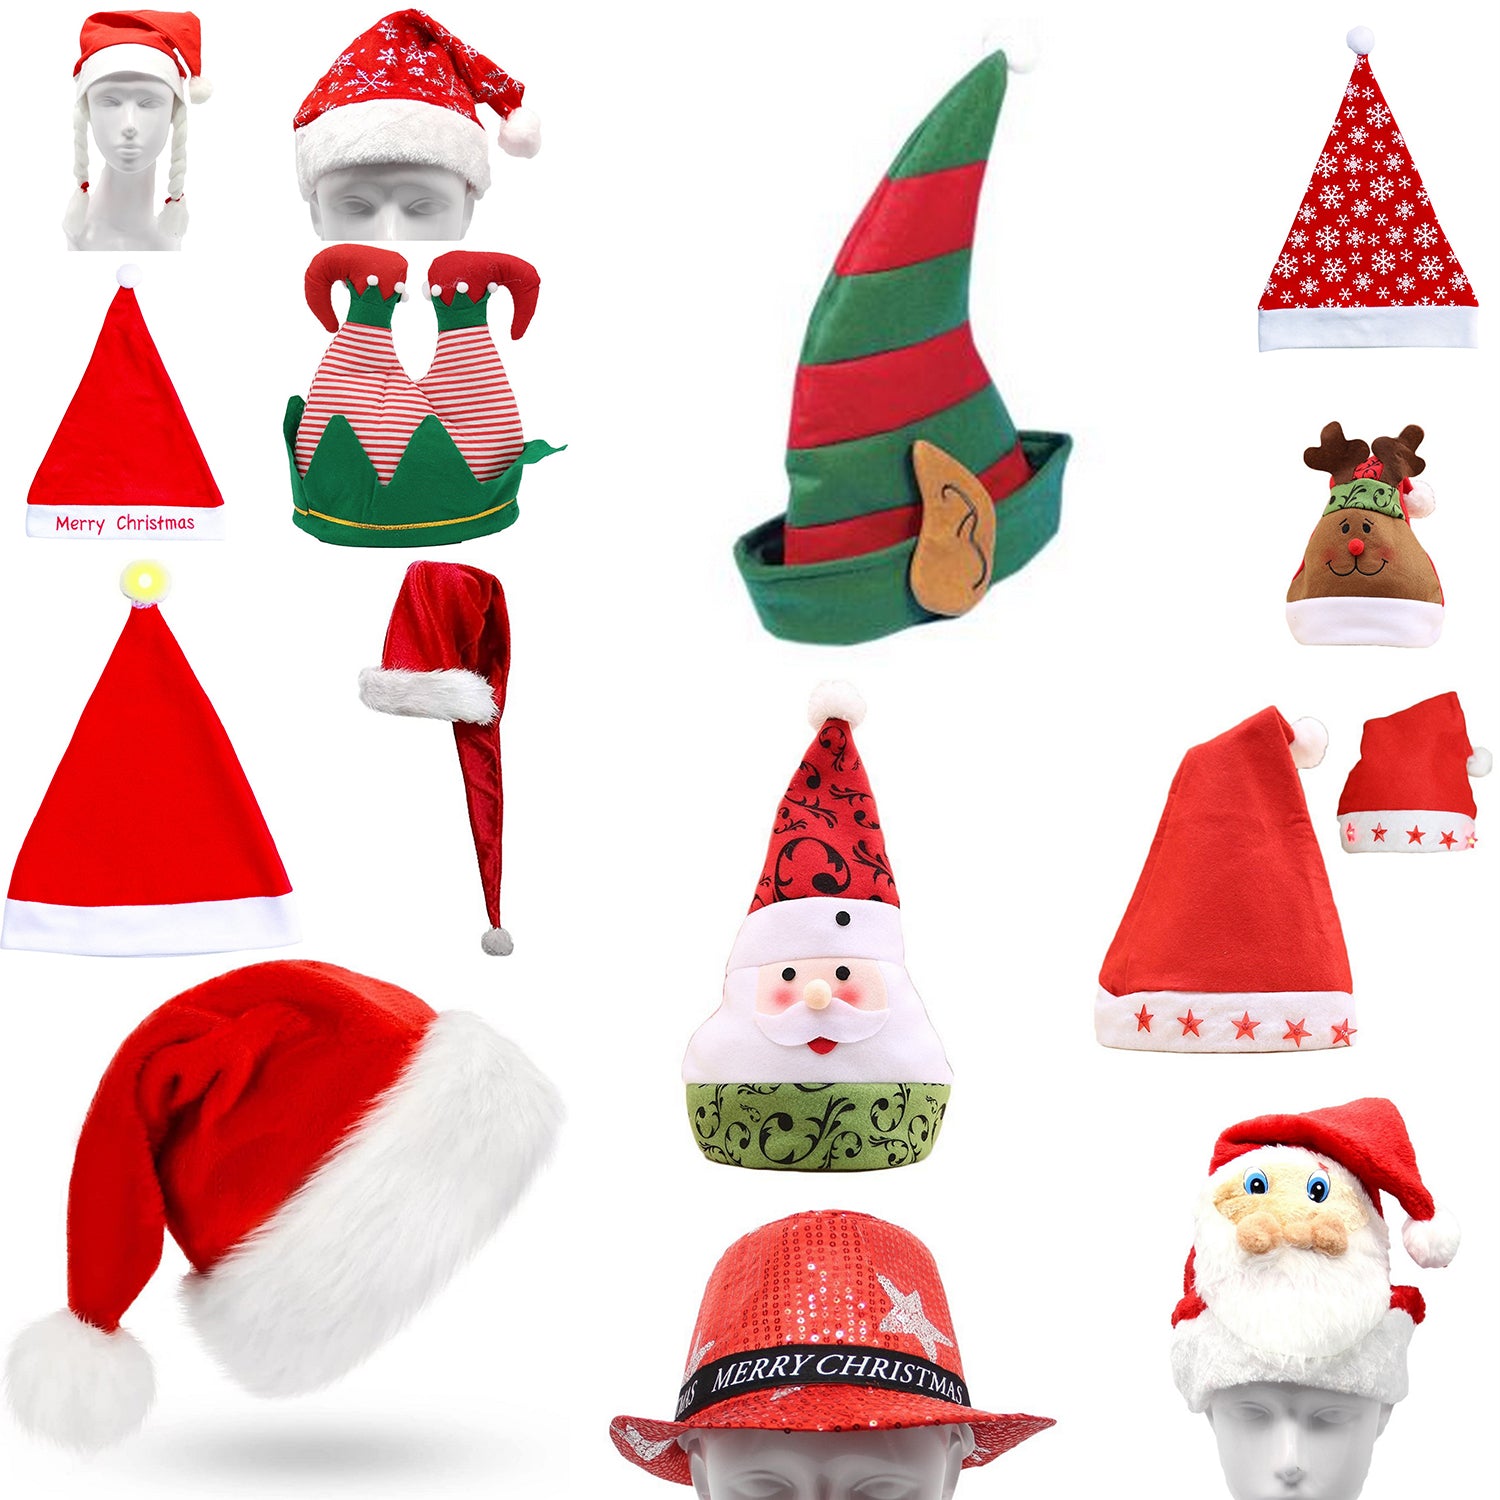 Christmas Unisex Adults Kids Novelty Hat Xmas Party Cap Santa Costume Dress Up - Zmart Australia